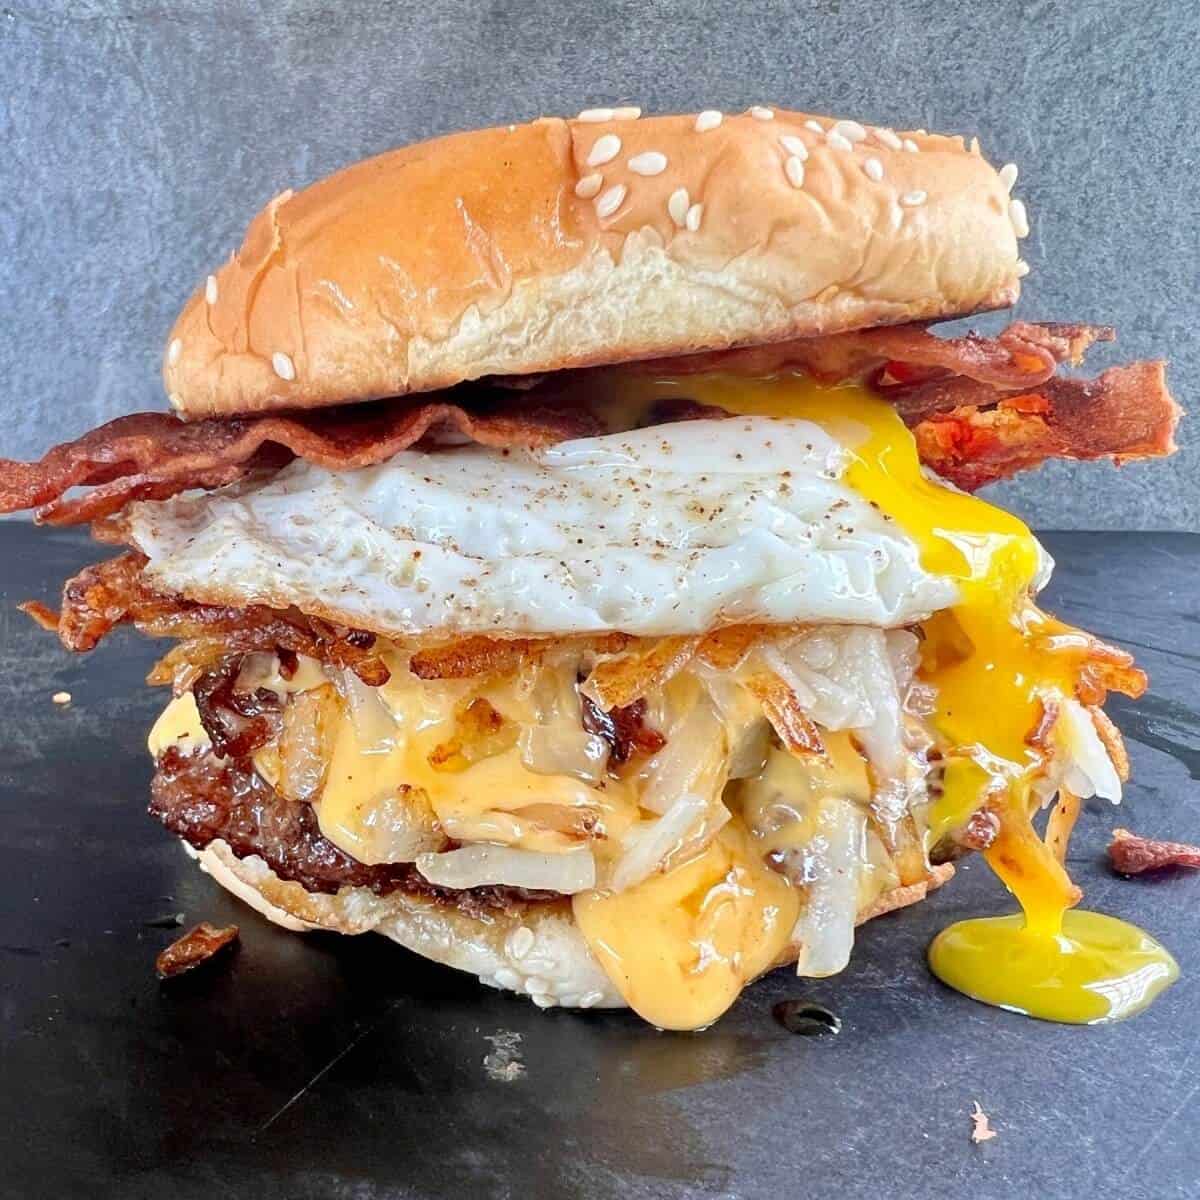 https://theflattopking.com/wp-content/uploads/2022/06/breakfast-burger.jpg